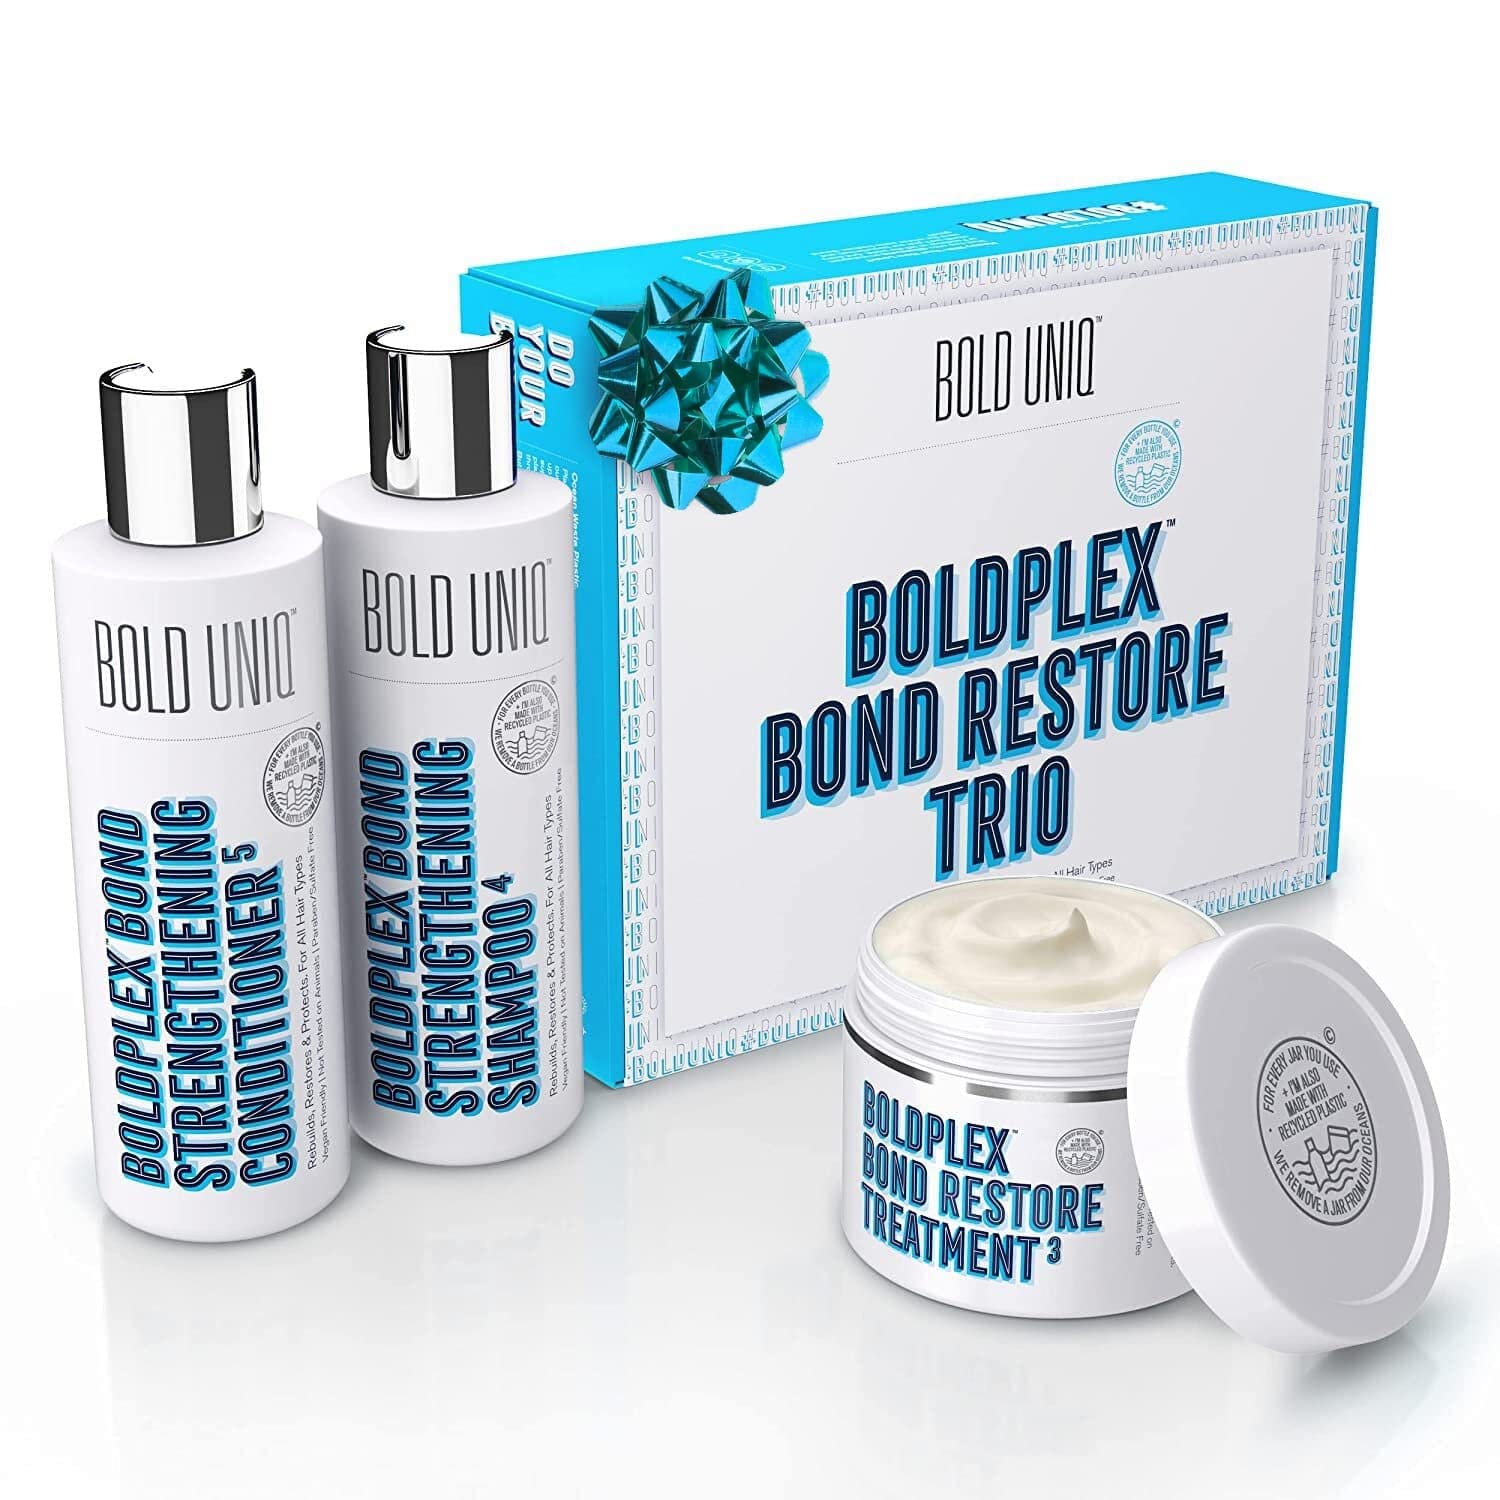 BoldPlex Bond Restore Regime